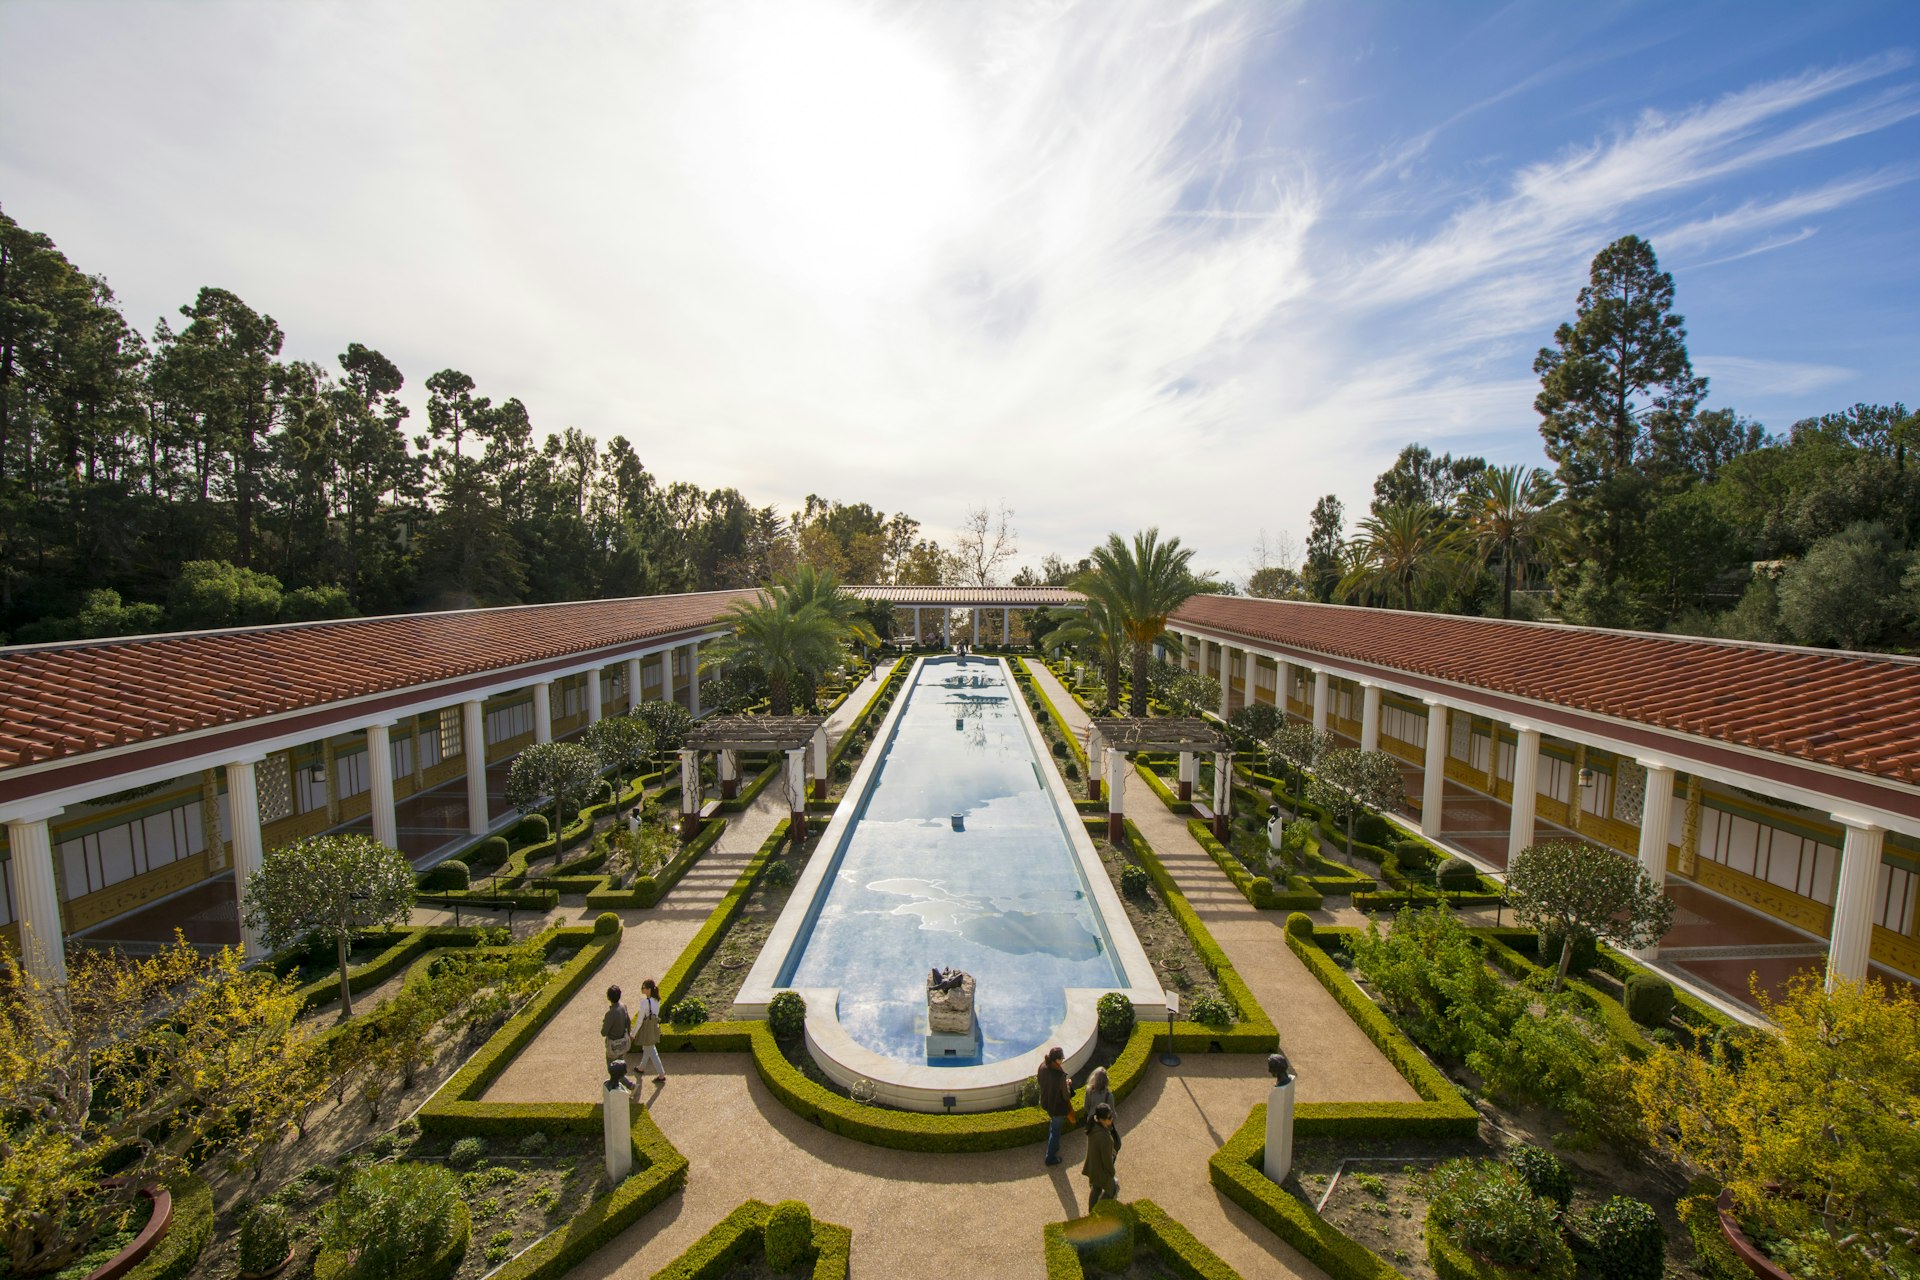 A pool and terrace at the Getty Villa, Los Angeles, California, USA, near Malibu